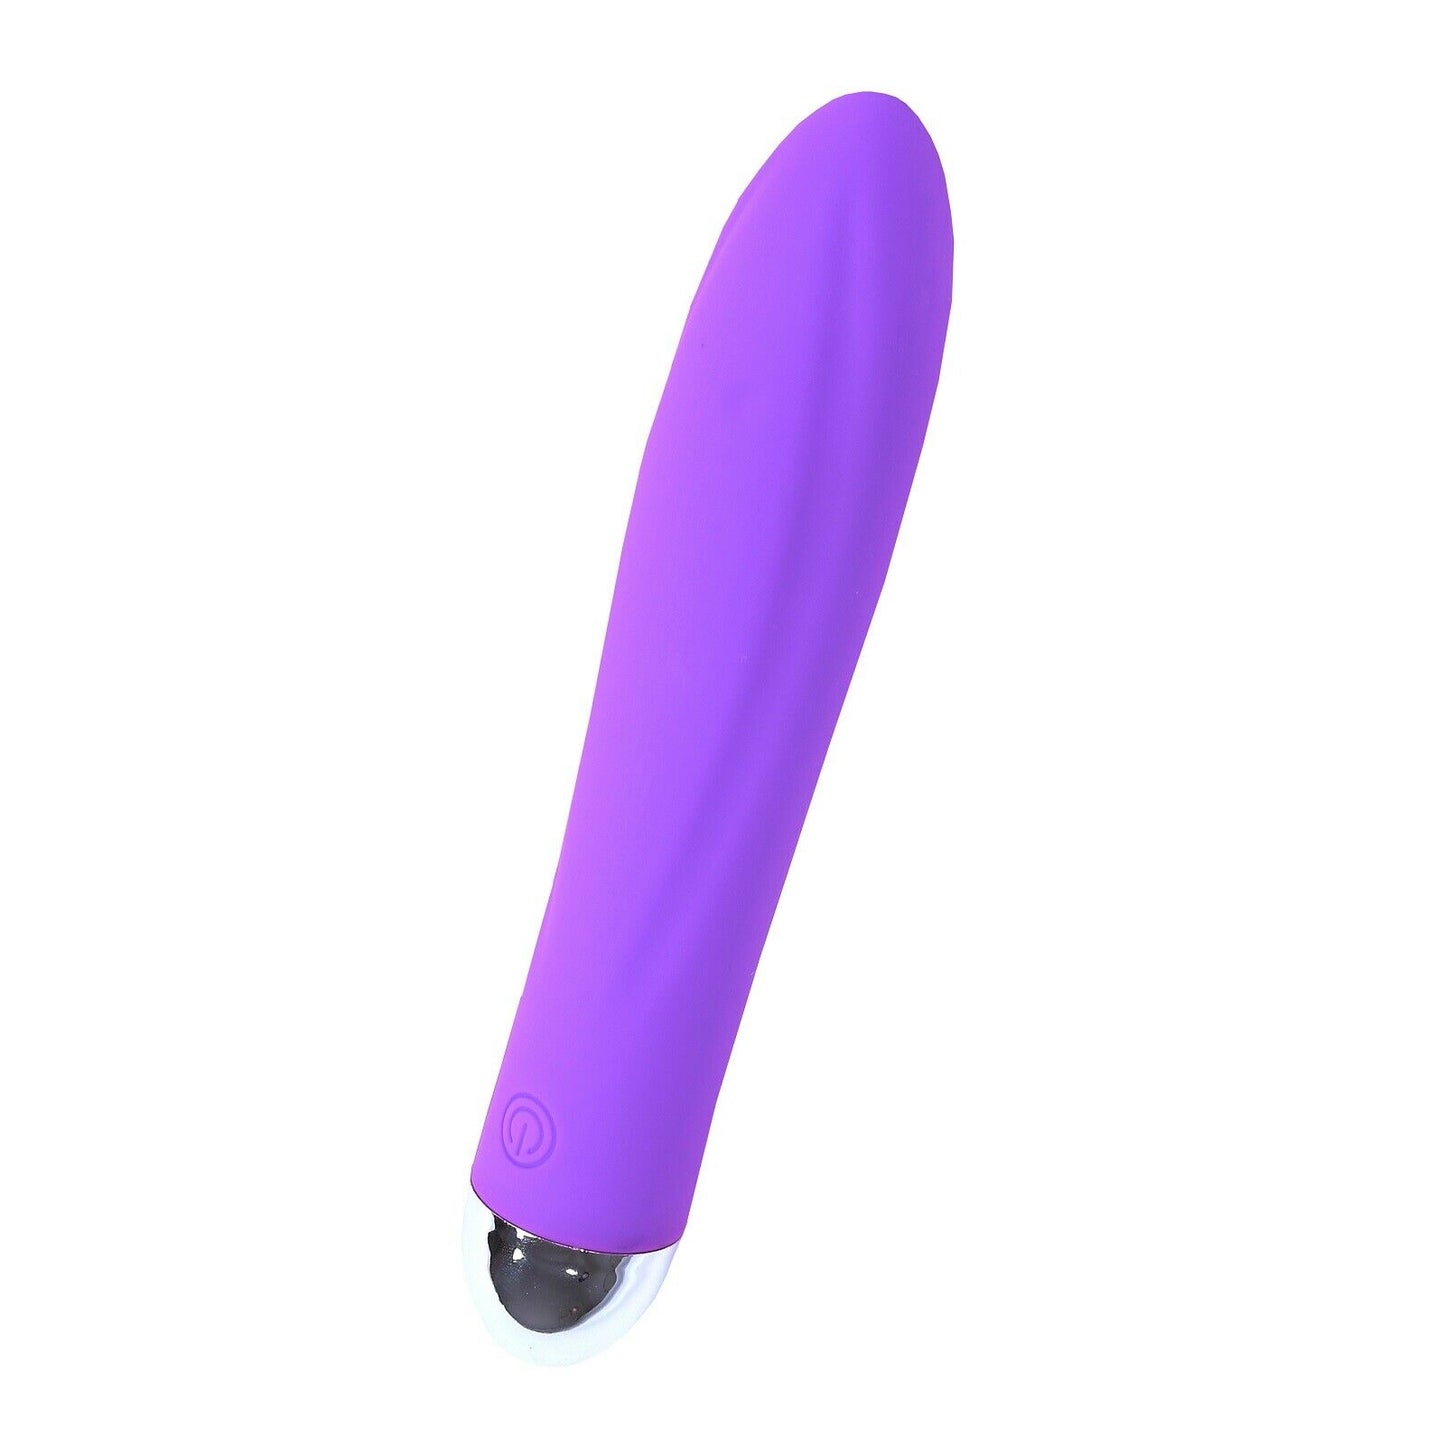 Vibrator Dildo Wand Female Vaginal Clit Anal Bullet G Spot Massager Adult Sex Toy